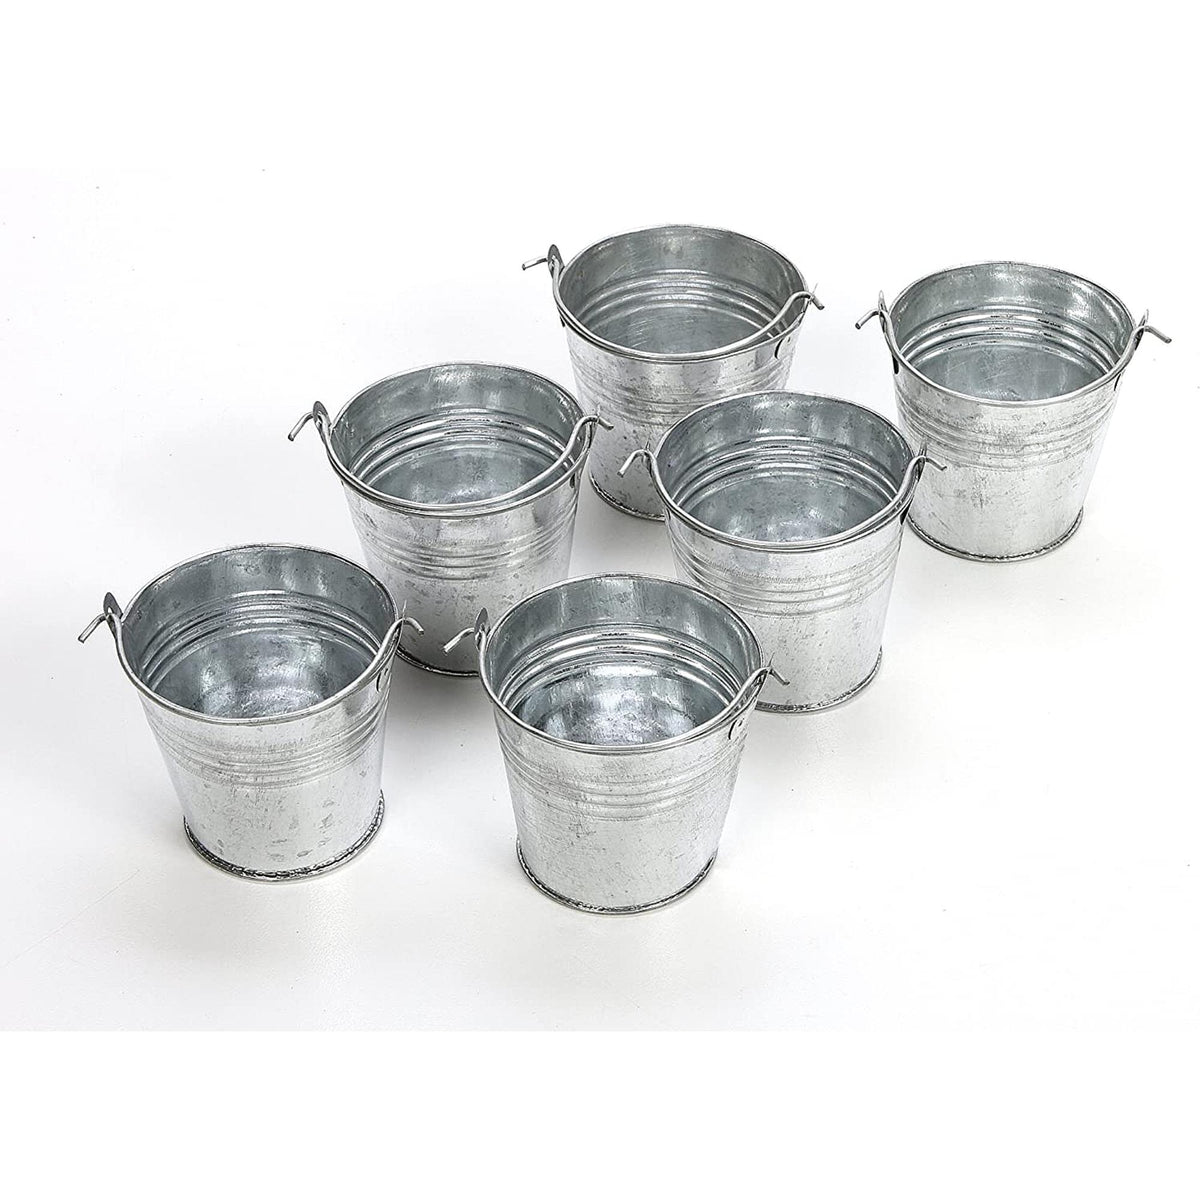 HOSLEY® Iron Mini Galvanized Buckets, Set of 6 , 2.25 inches High each,